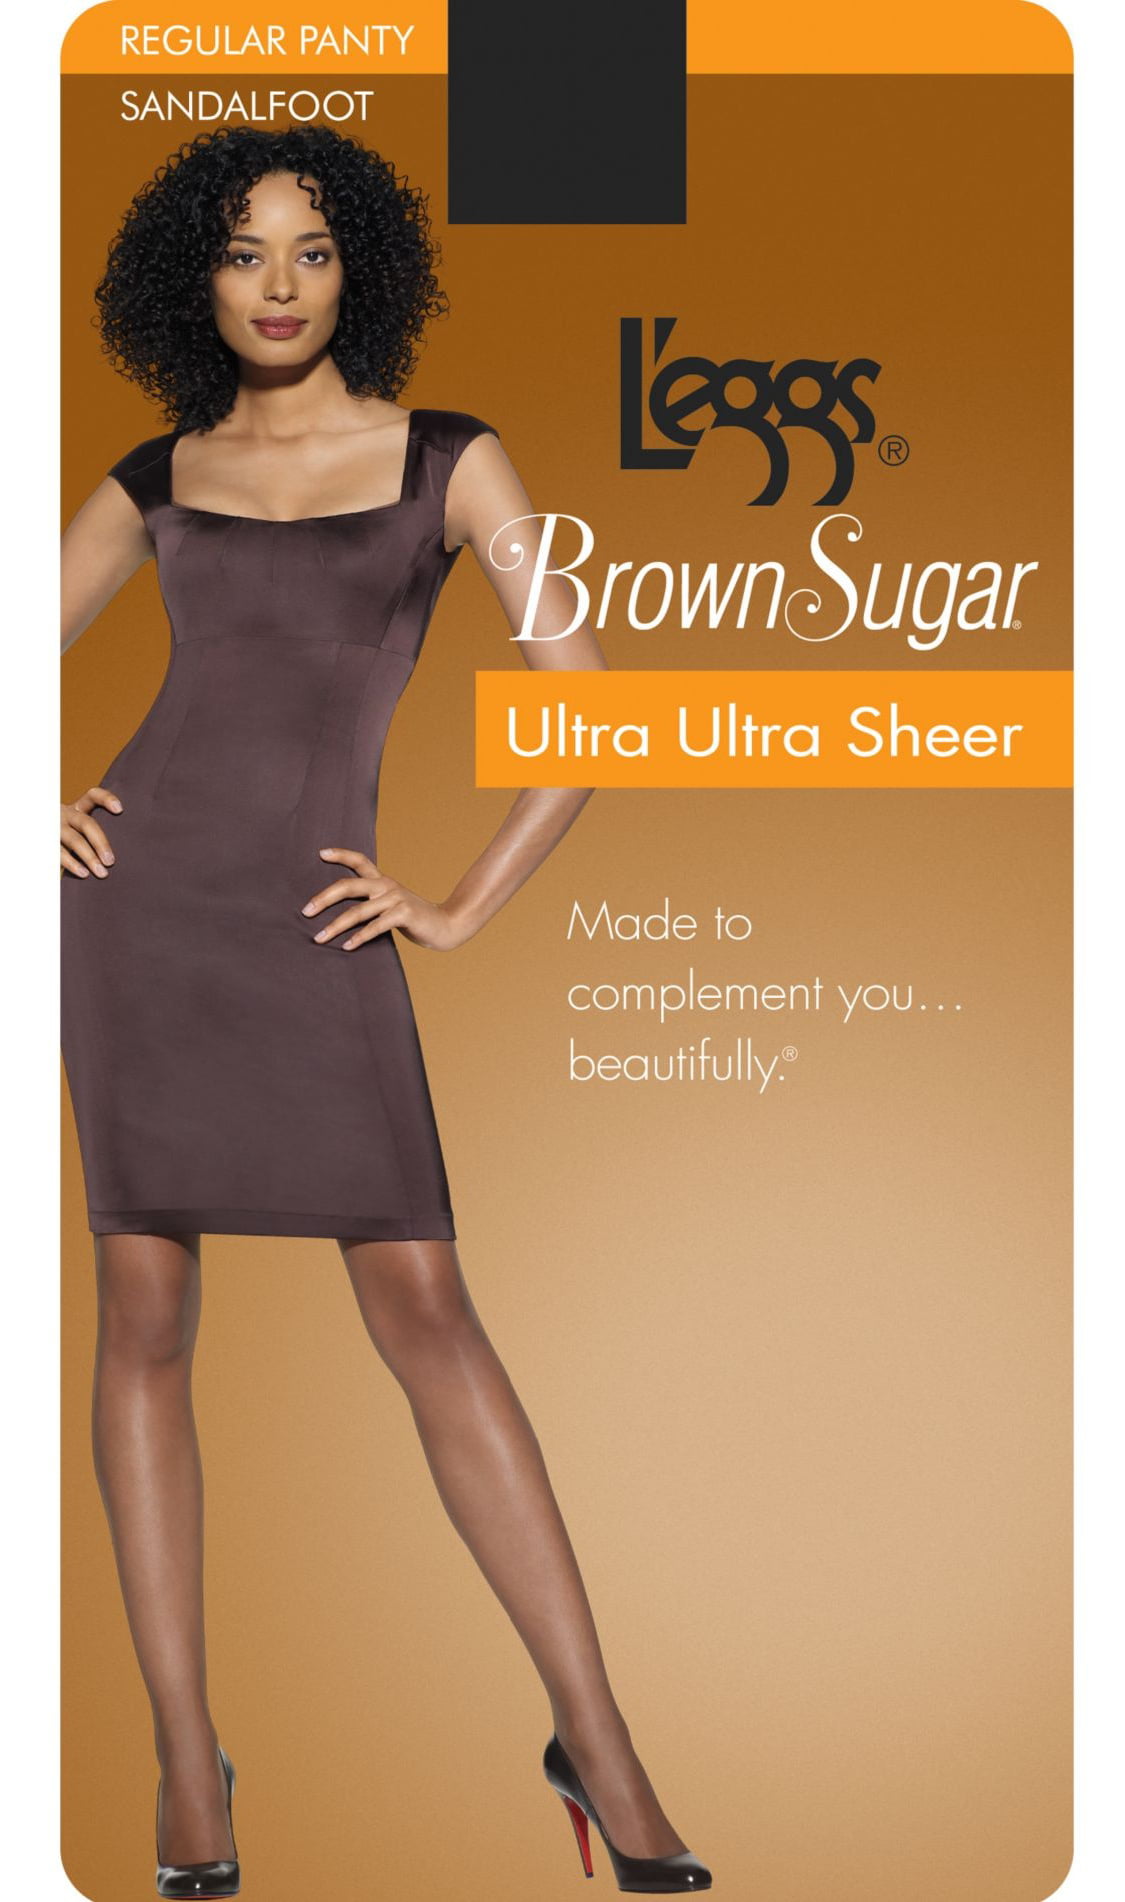 L'eggs Brown Sugar Ultra Sheer Pantyhose, 1-Pack Jet Black XL Women's 